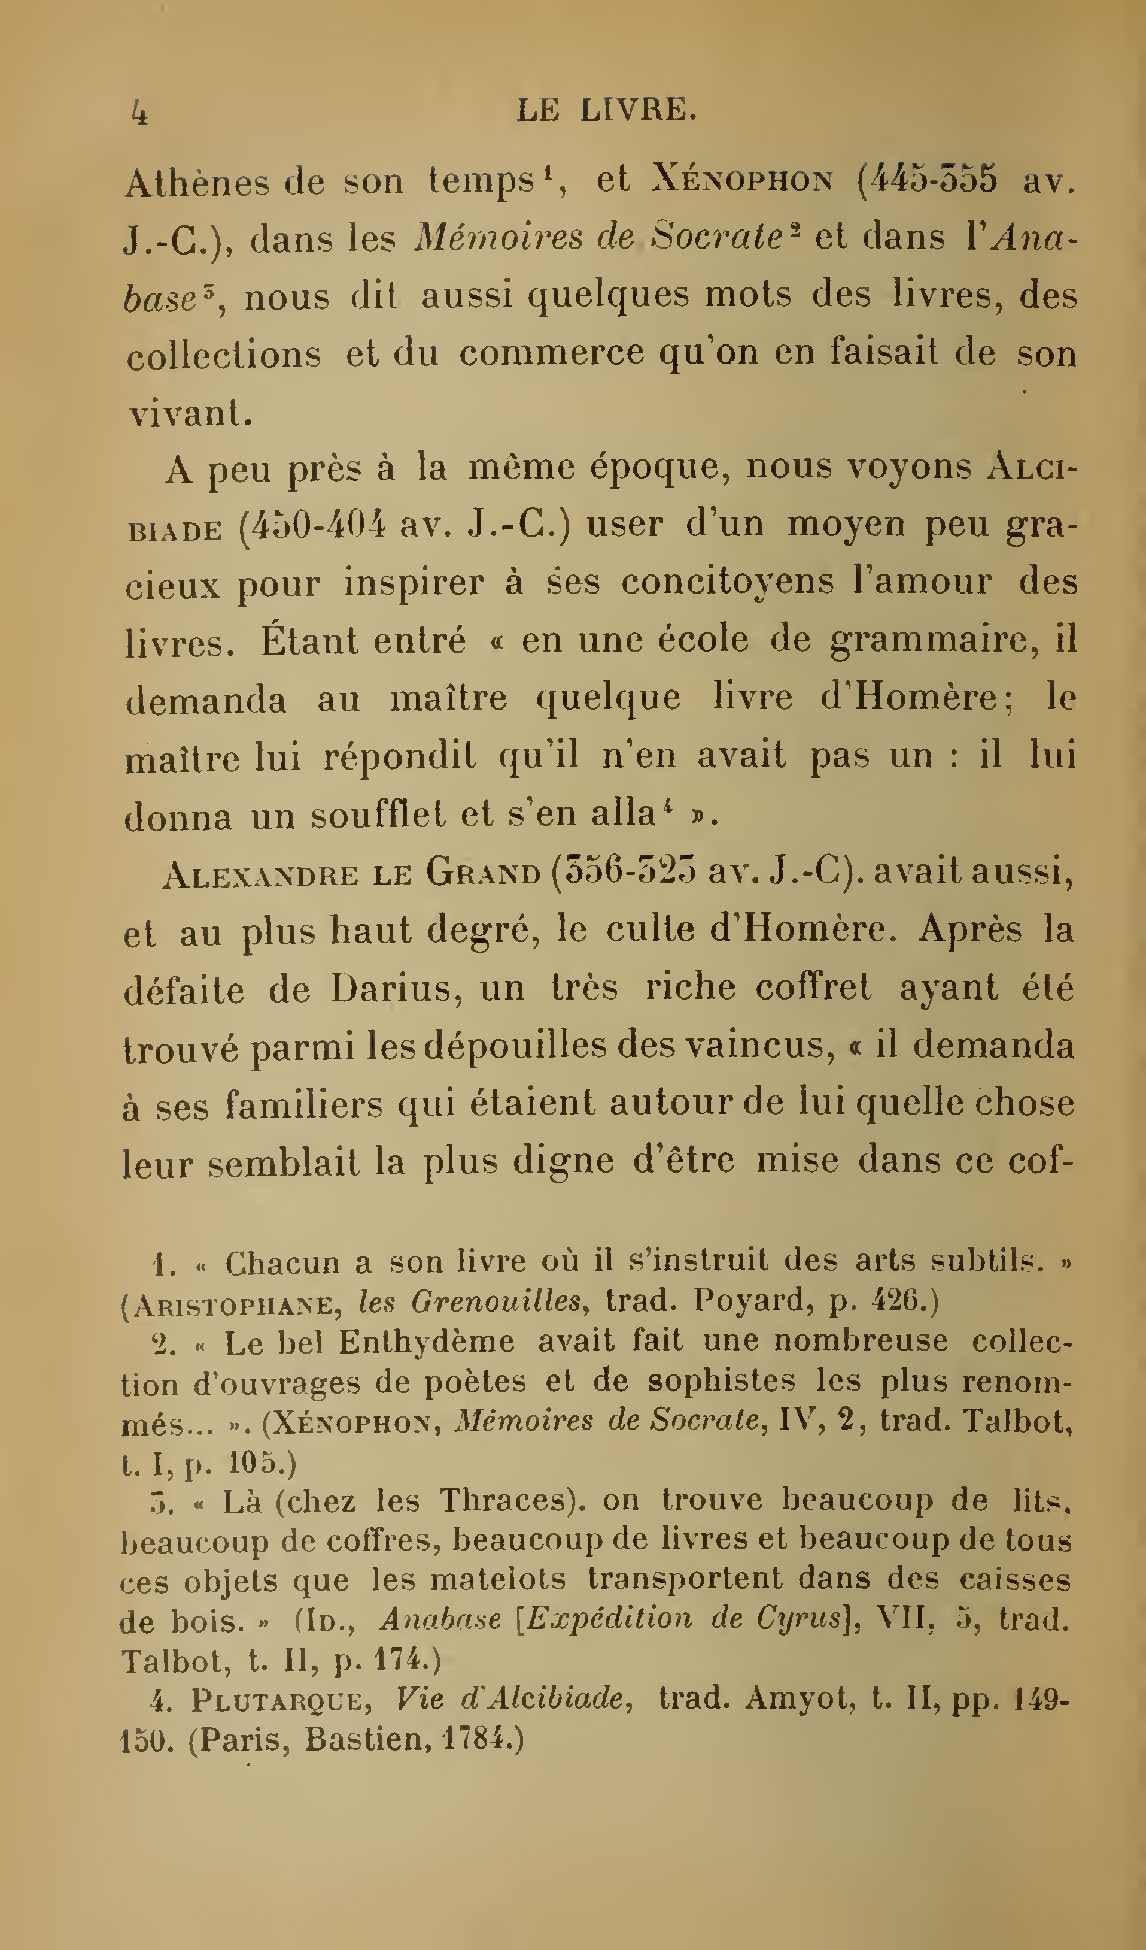 Albert Cim, Le Livre, t. I, p. 4.